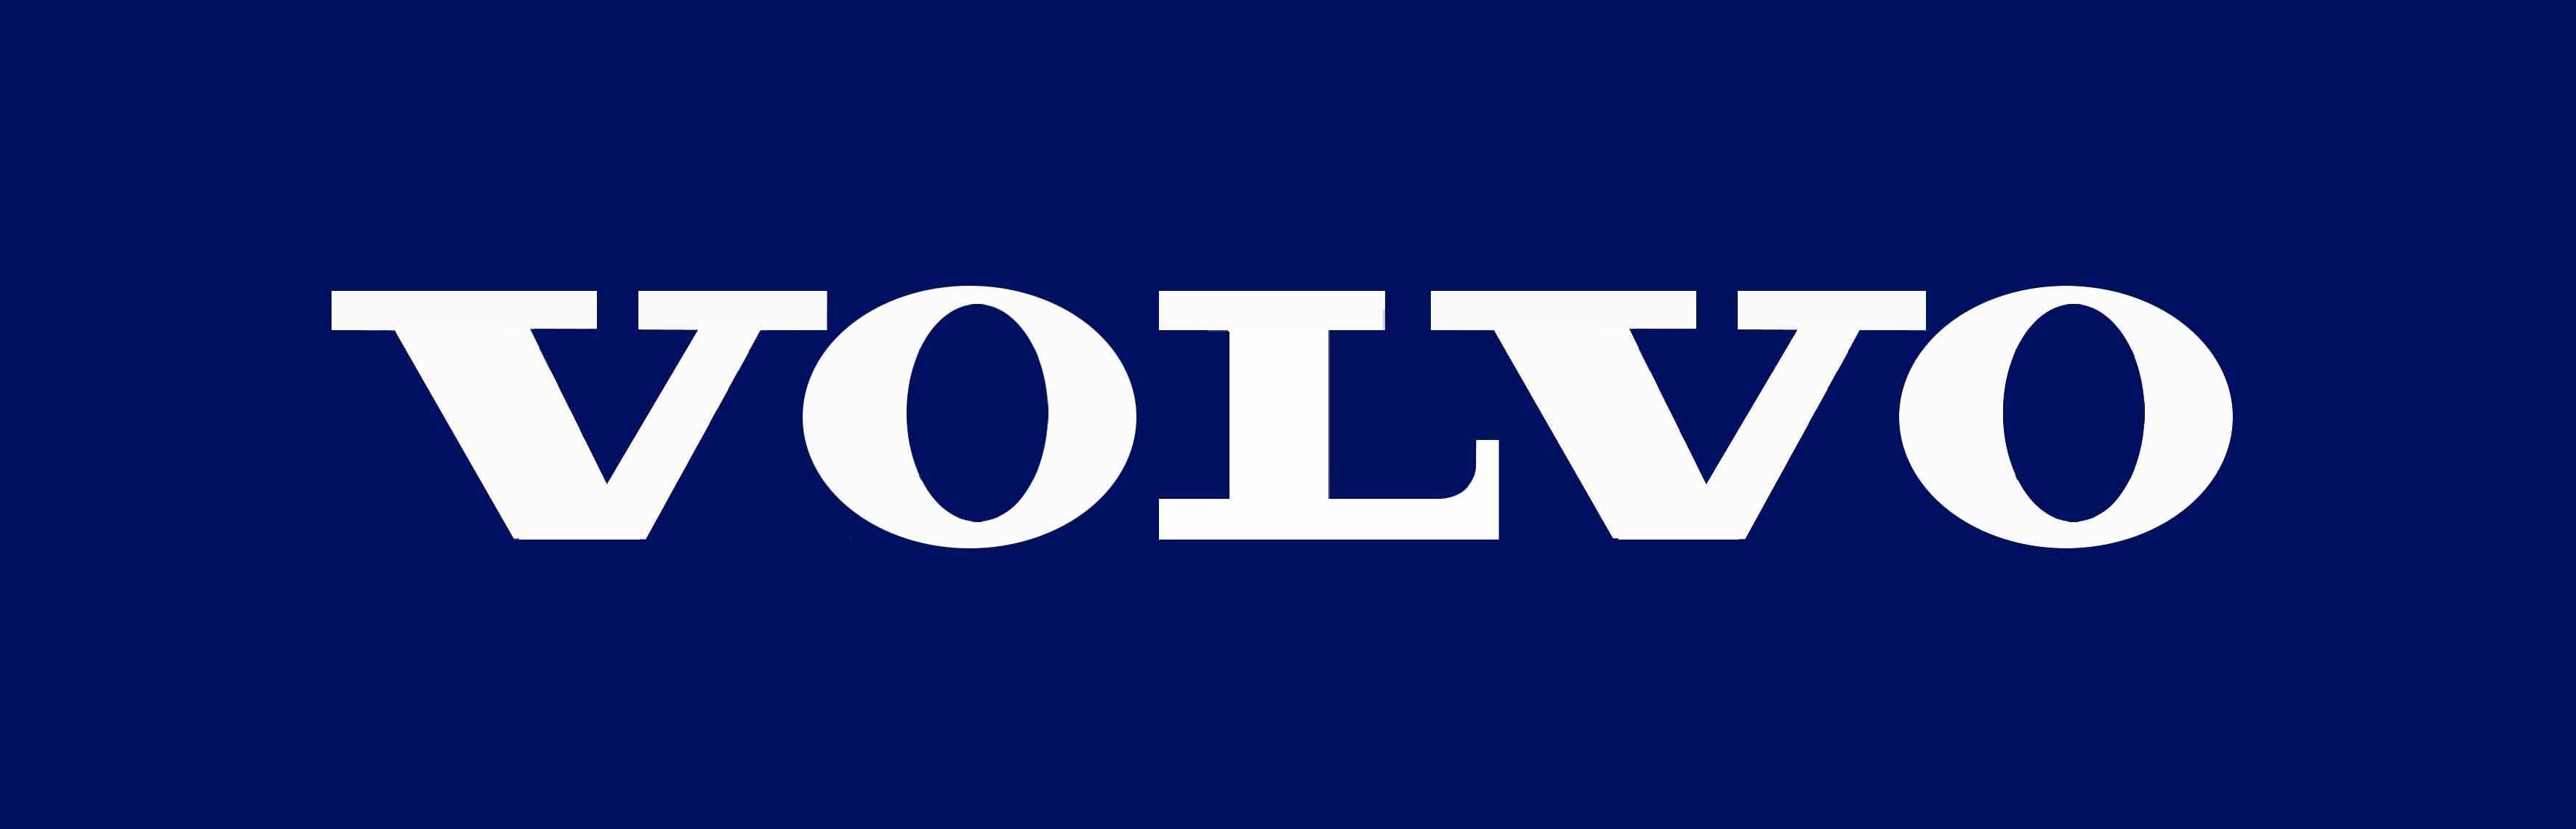 Wne Logo - Volvo Logo Wallpaper For Android #Wne | Cars | Volvo, Cars, Volvo v40